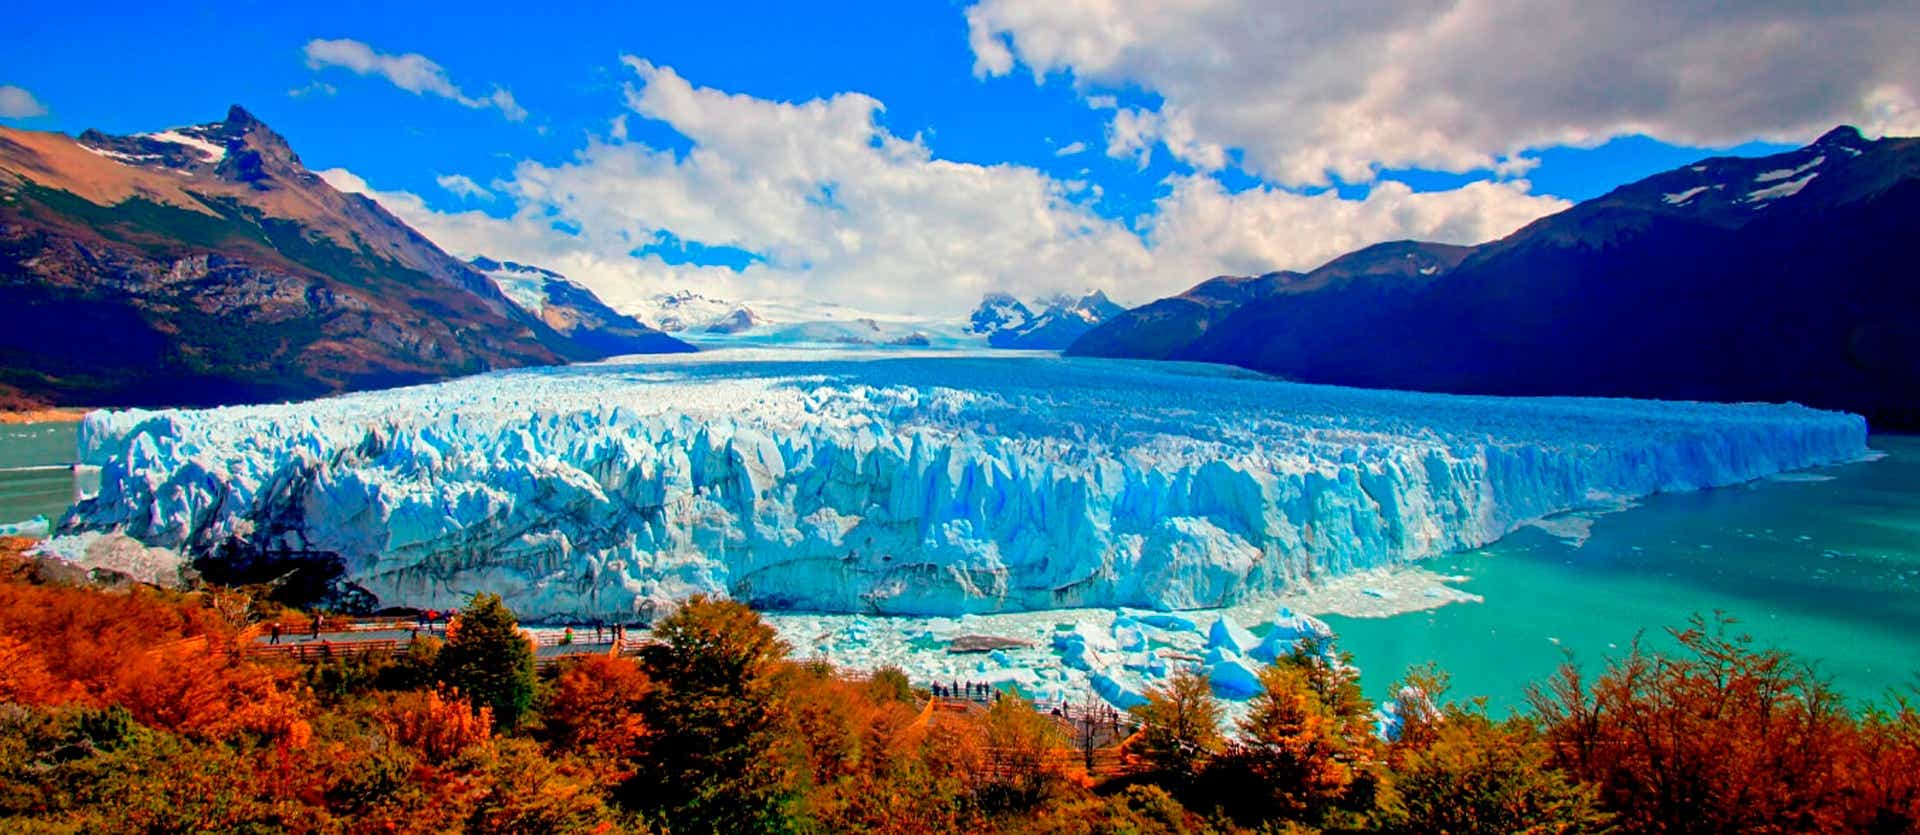 Perito Moreno Glacier <span class="iconos separador"></span> Argentina